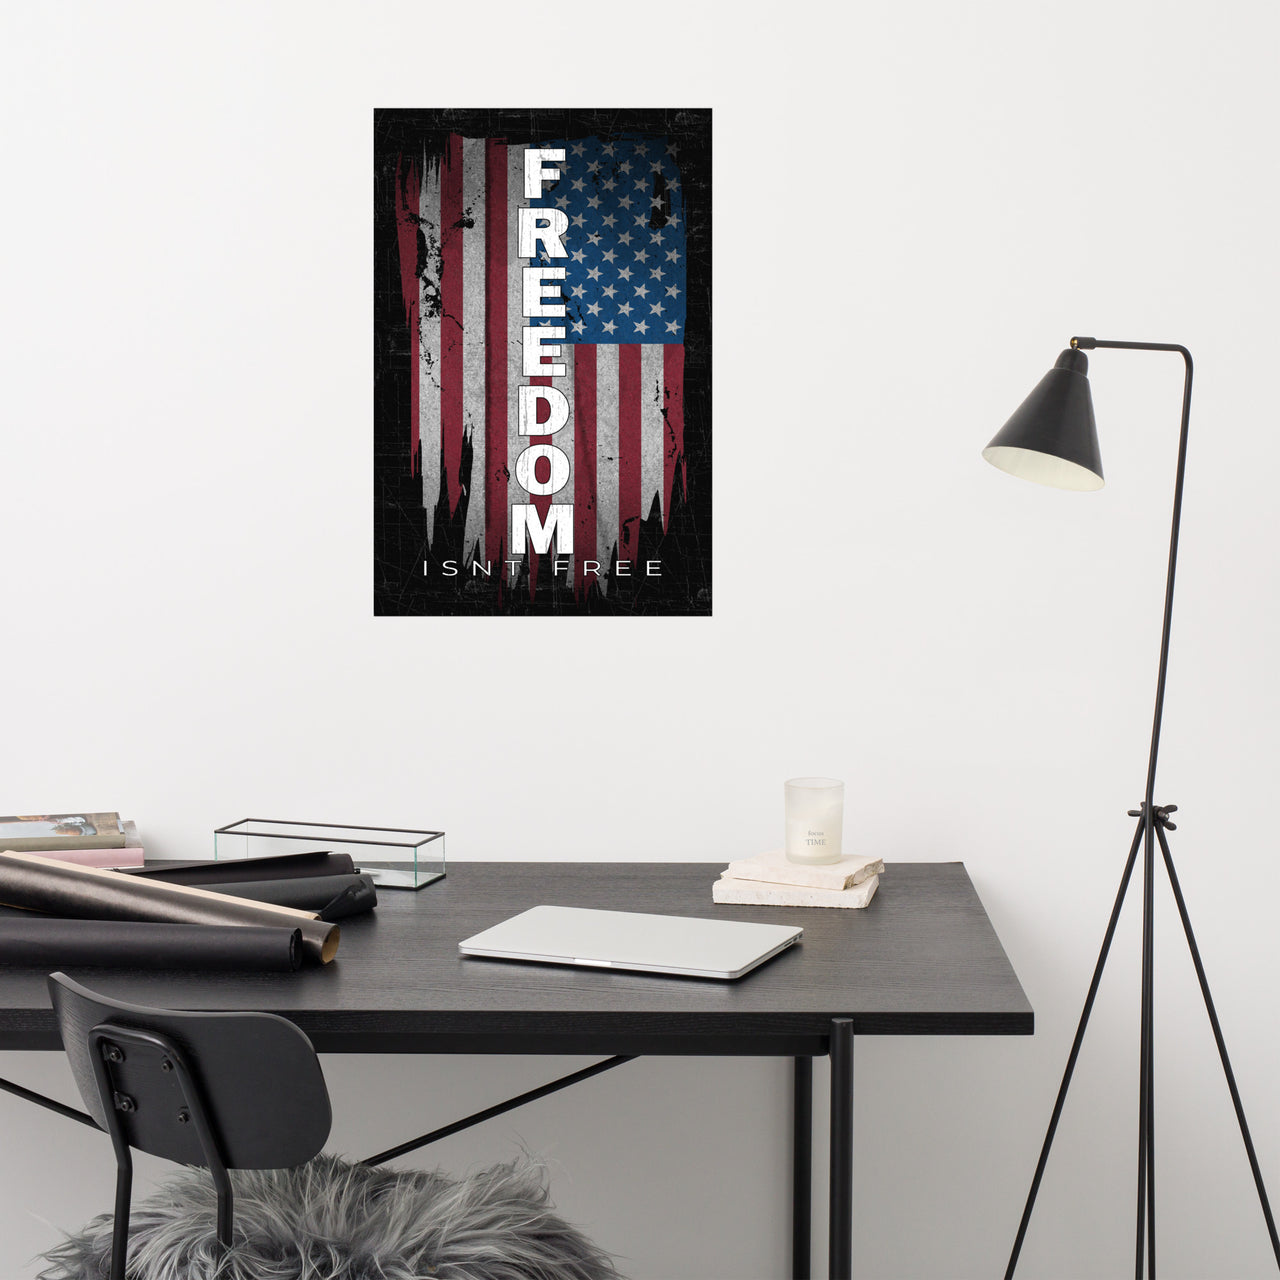 Freedom Isnt Free Poster - Patriotic American Flag Art